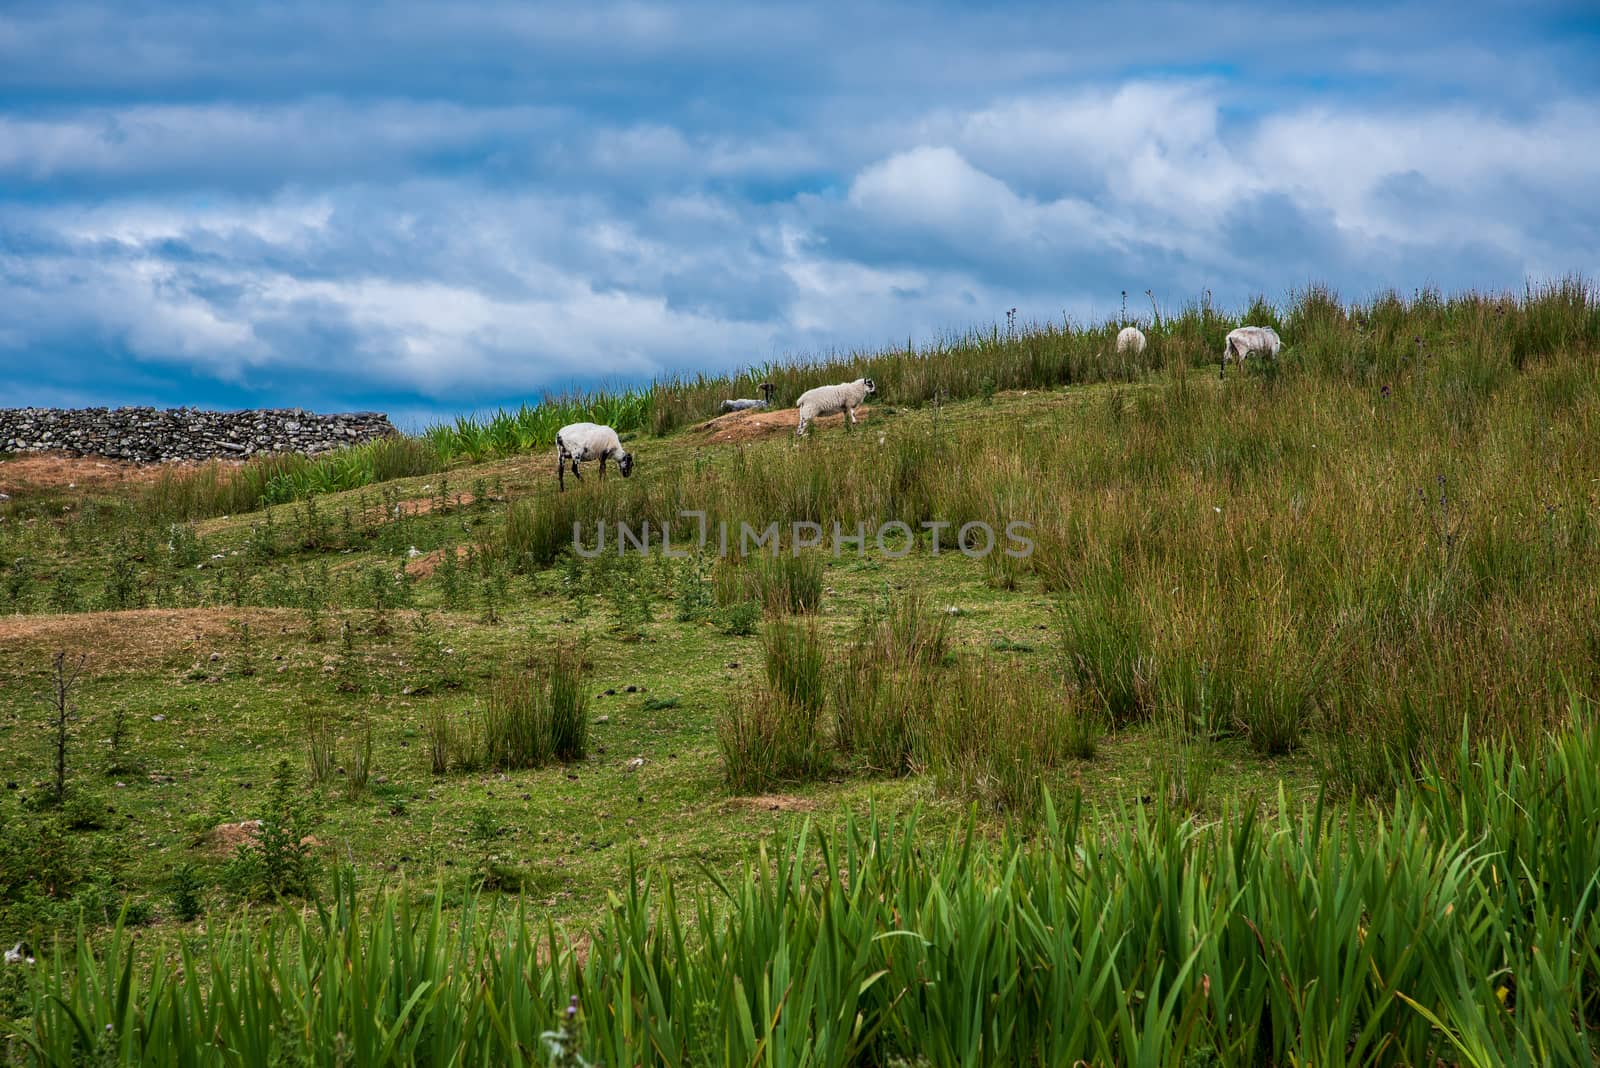 Sheep and Goats Climbing a HIll by jfbenning